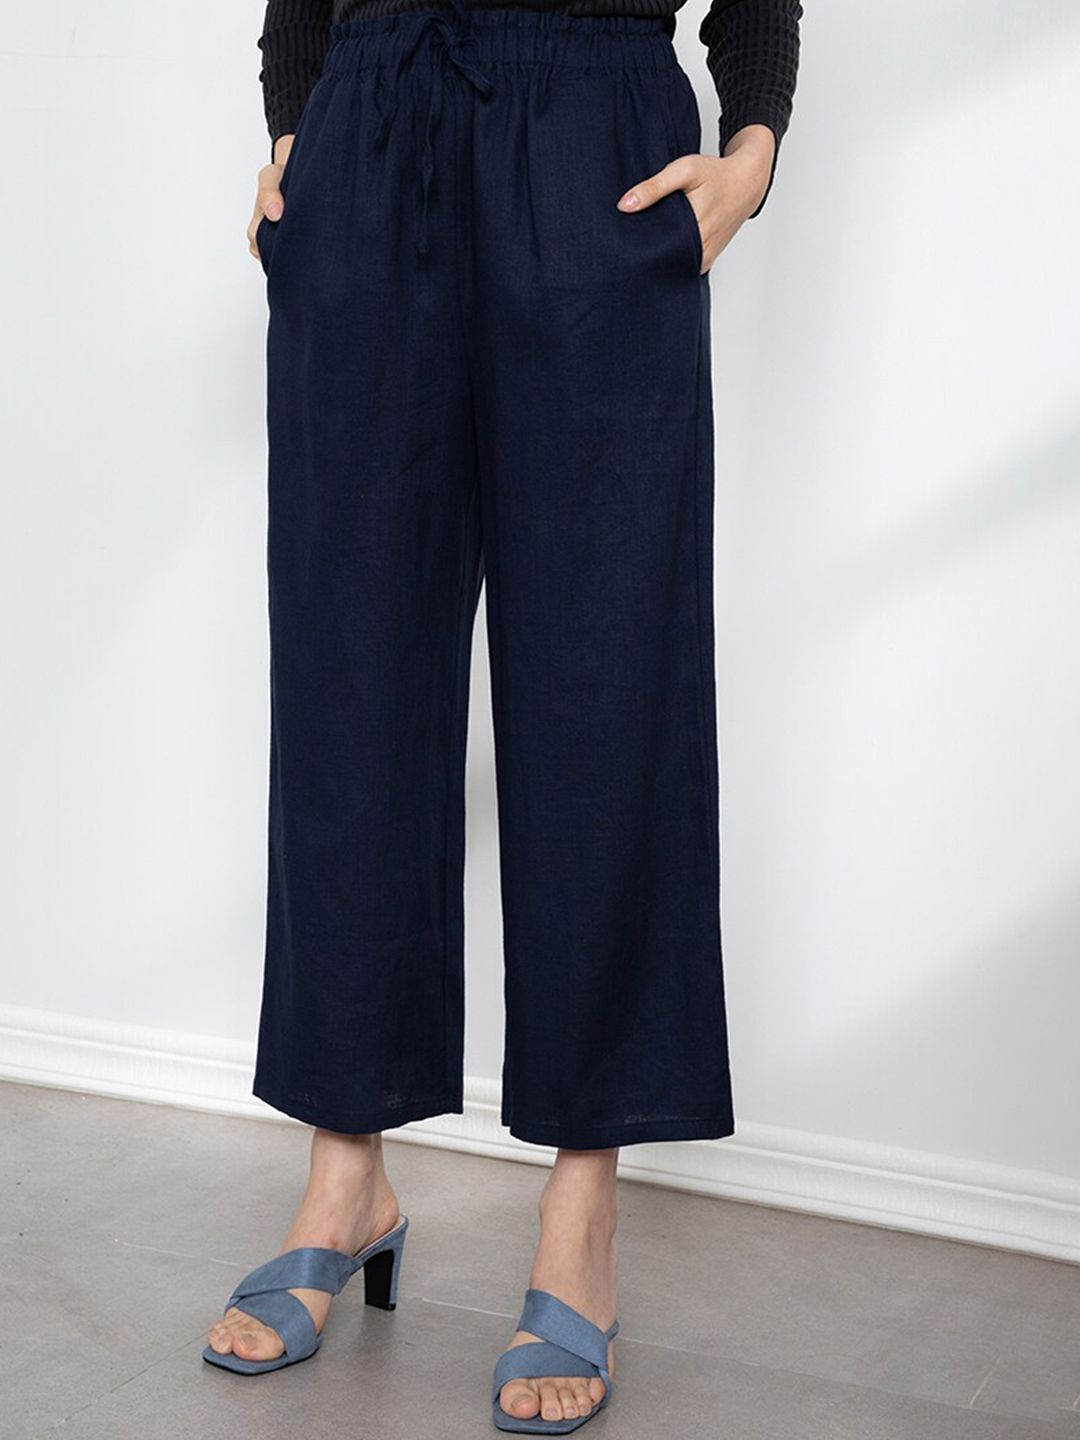 ORIGIN BY ZALORA Women Navy Blue Trousers Price in India